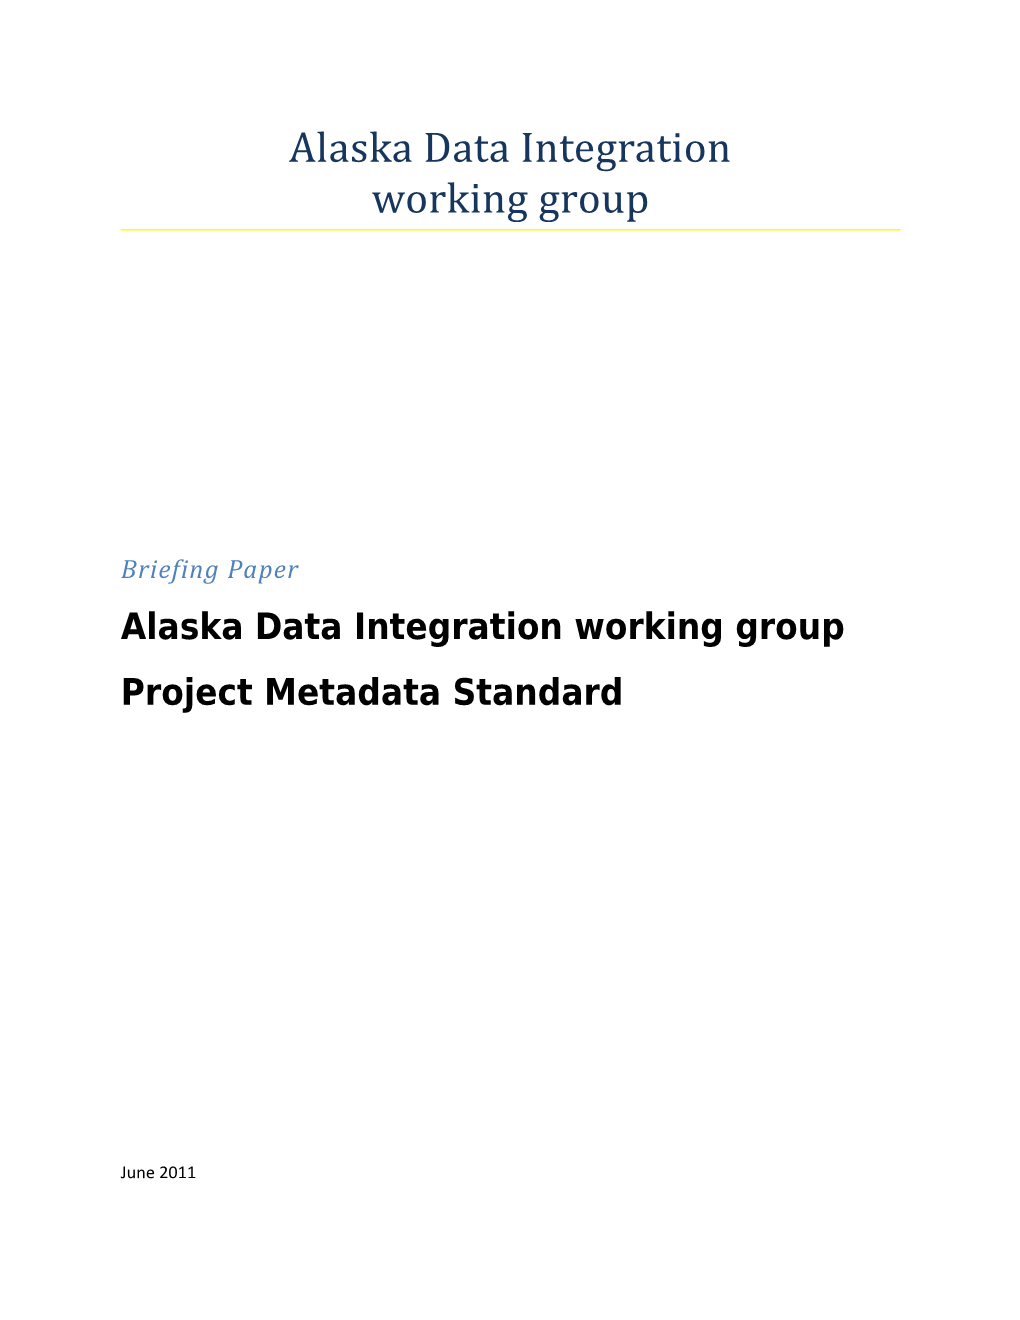 Alaska Data Integration Working Group